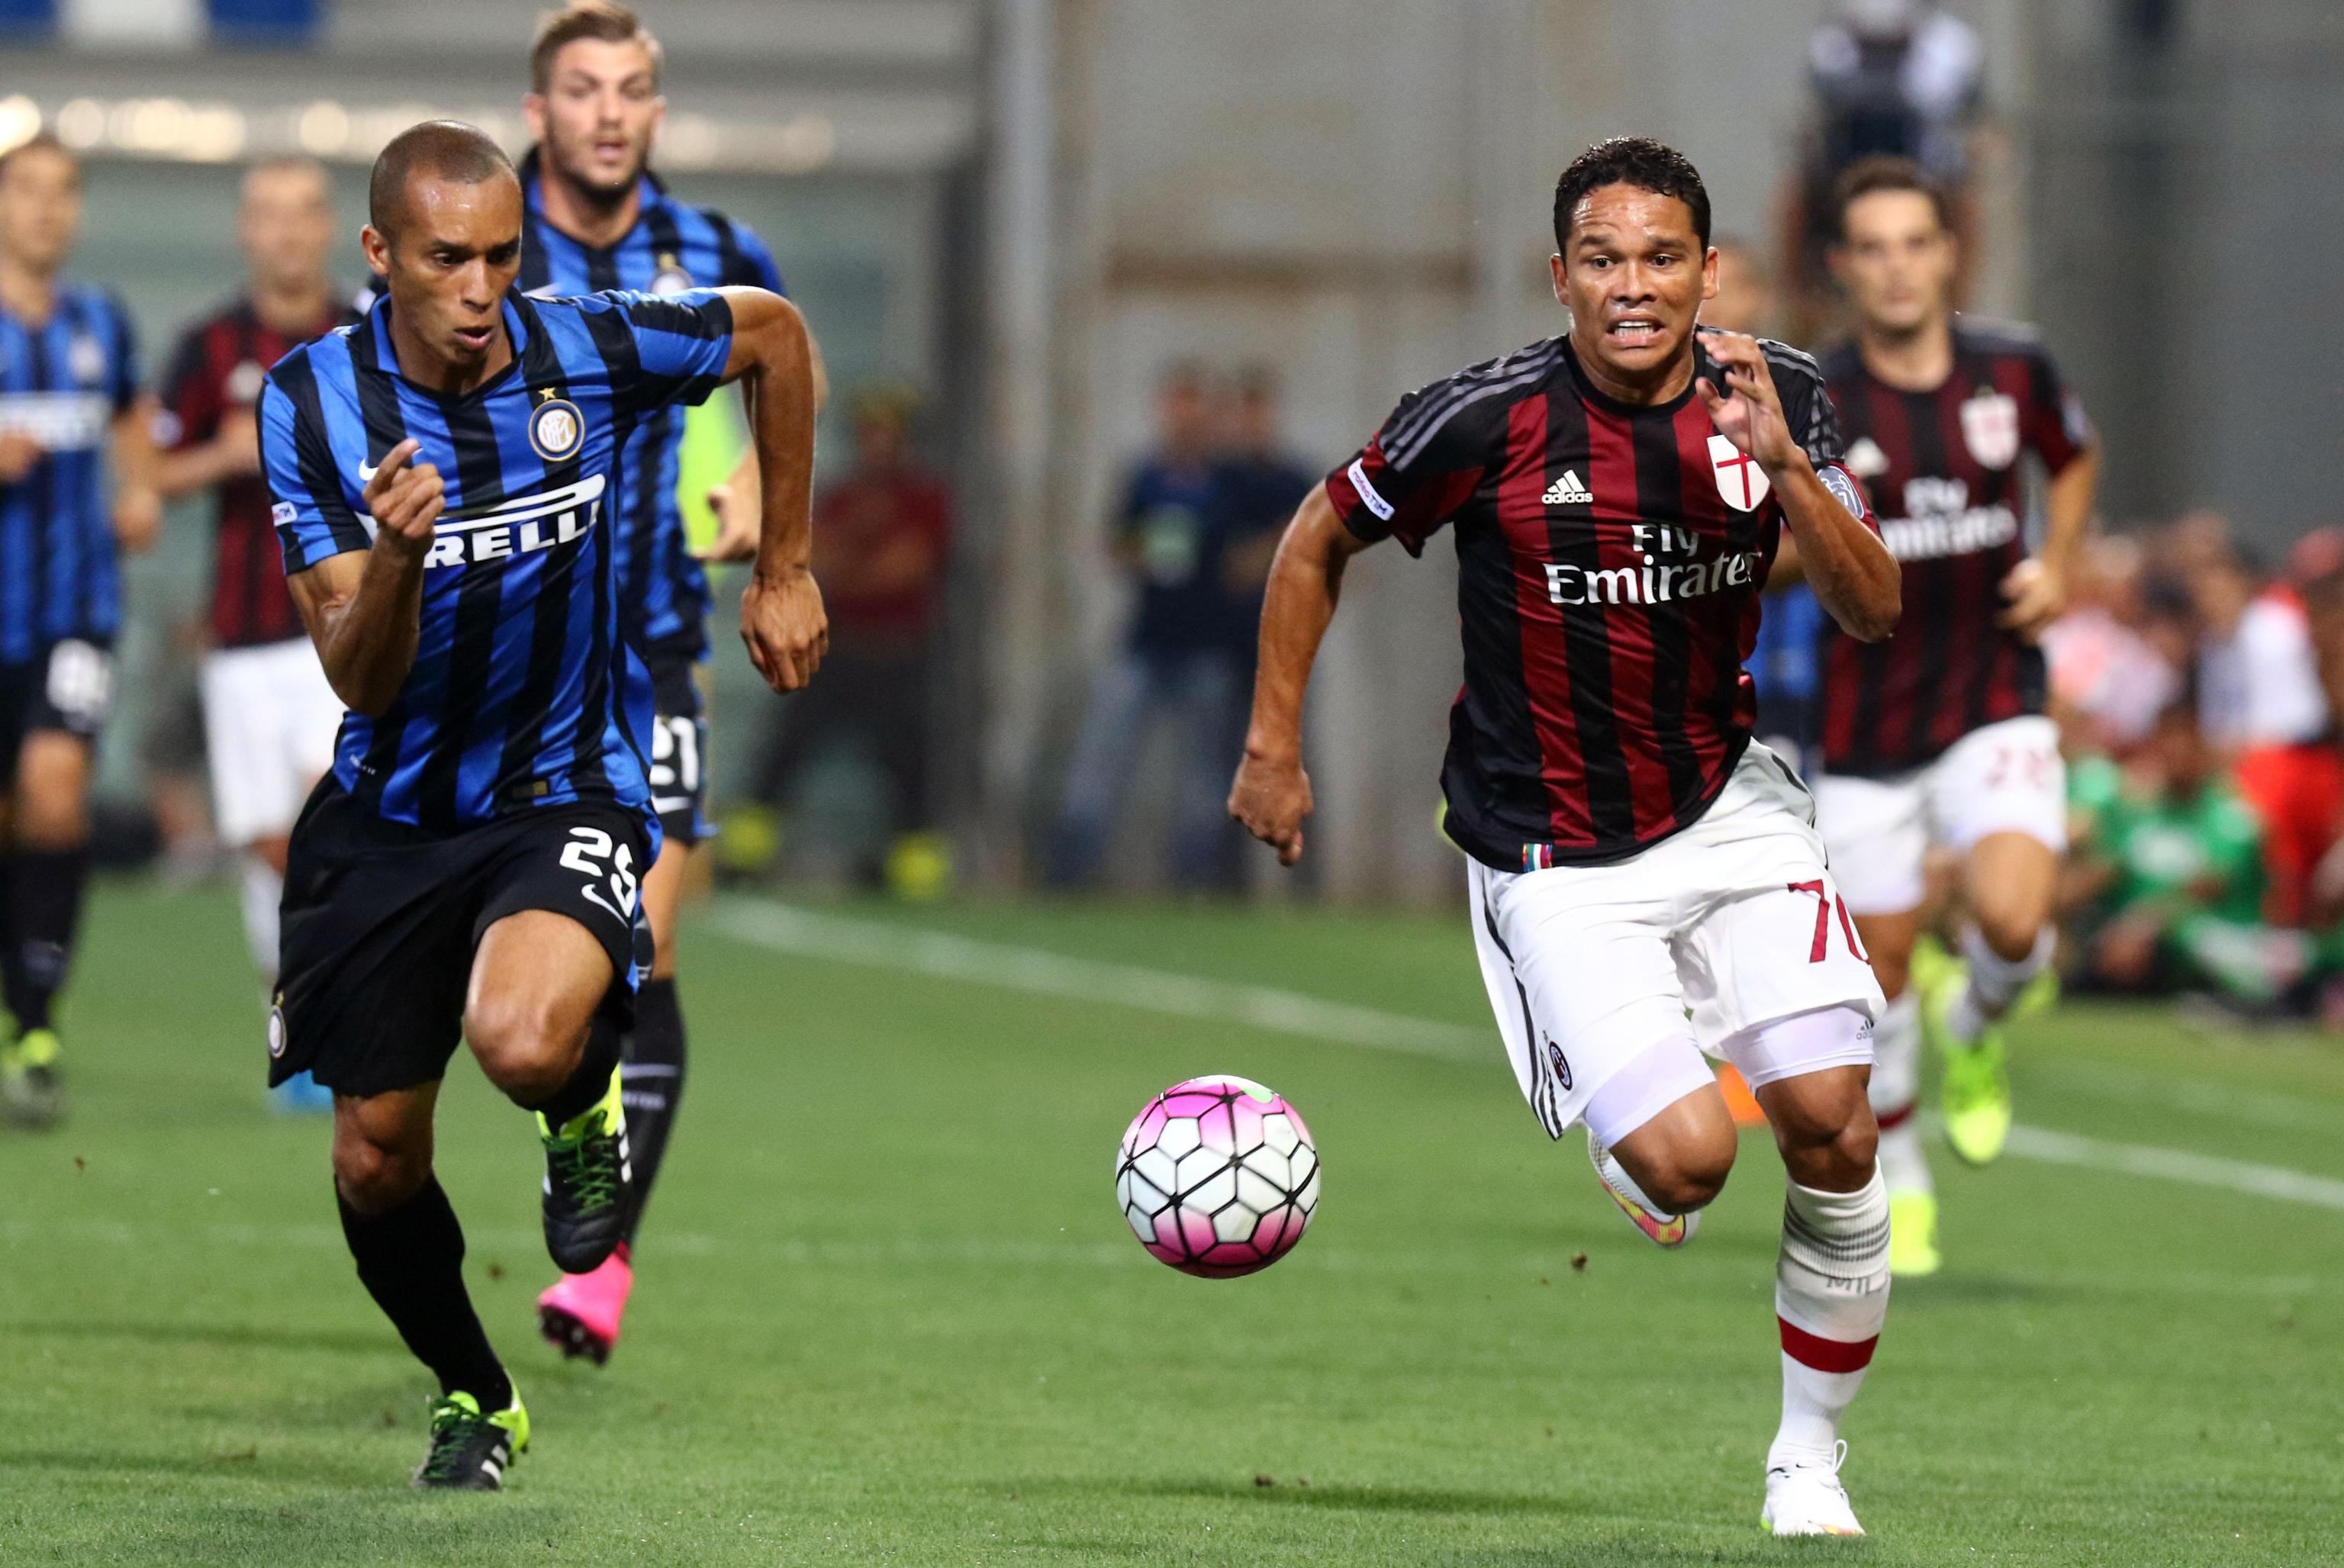 Milan takes centerstage with Derby della Madonnina; Seattle